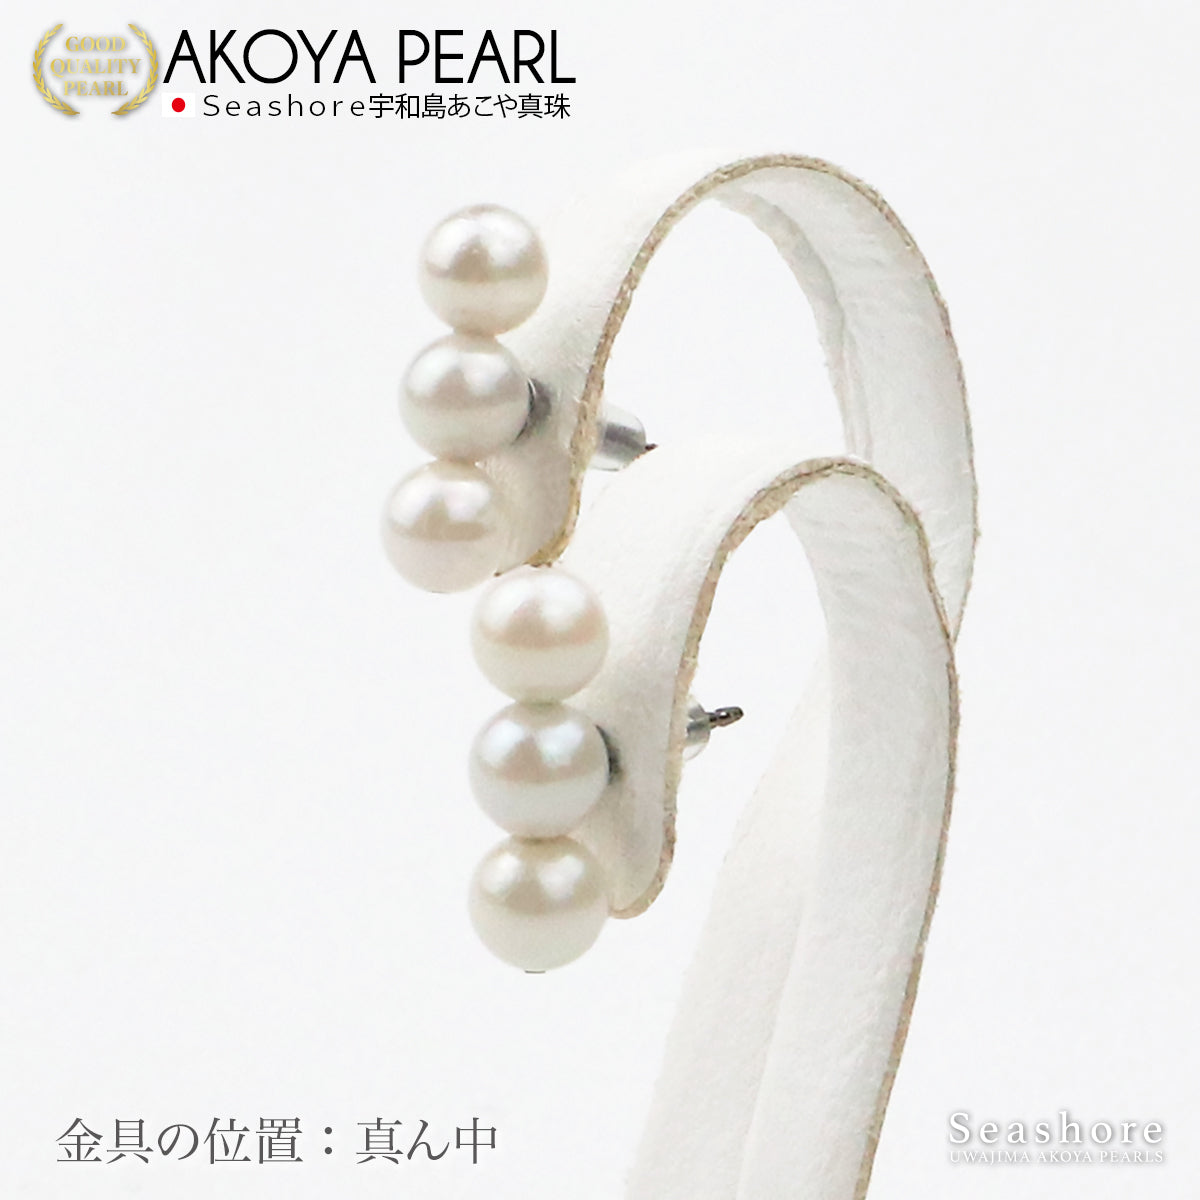 3 pearl line earrings [5.0-5.5mm] Titanium Akoya pearls